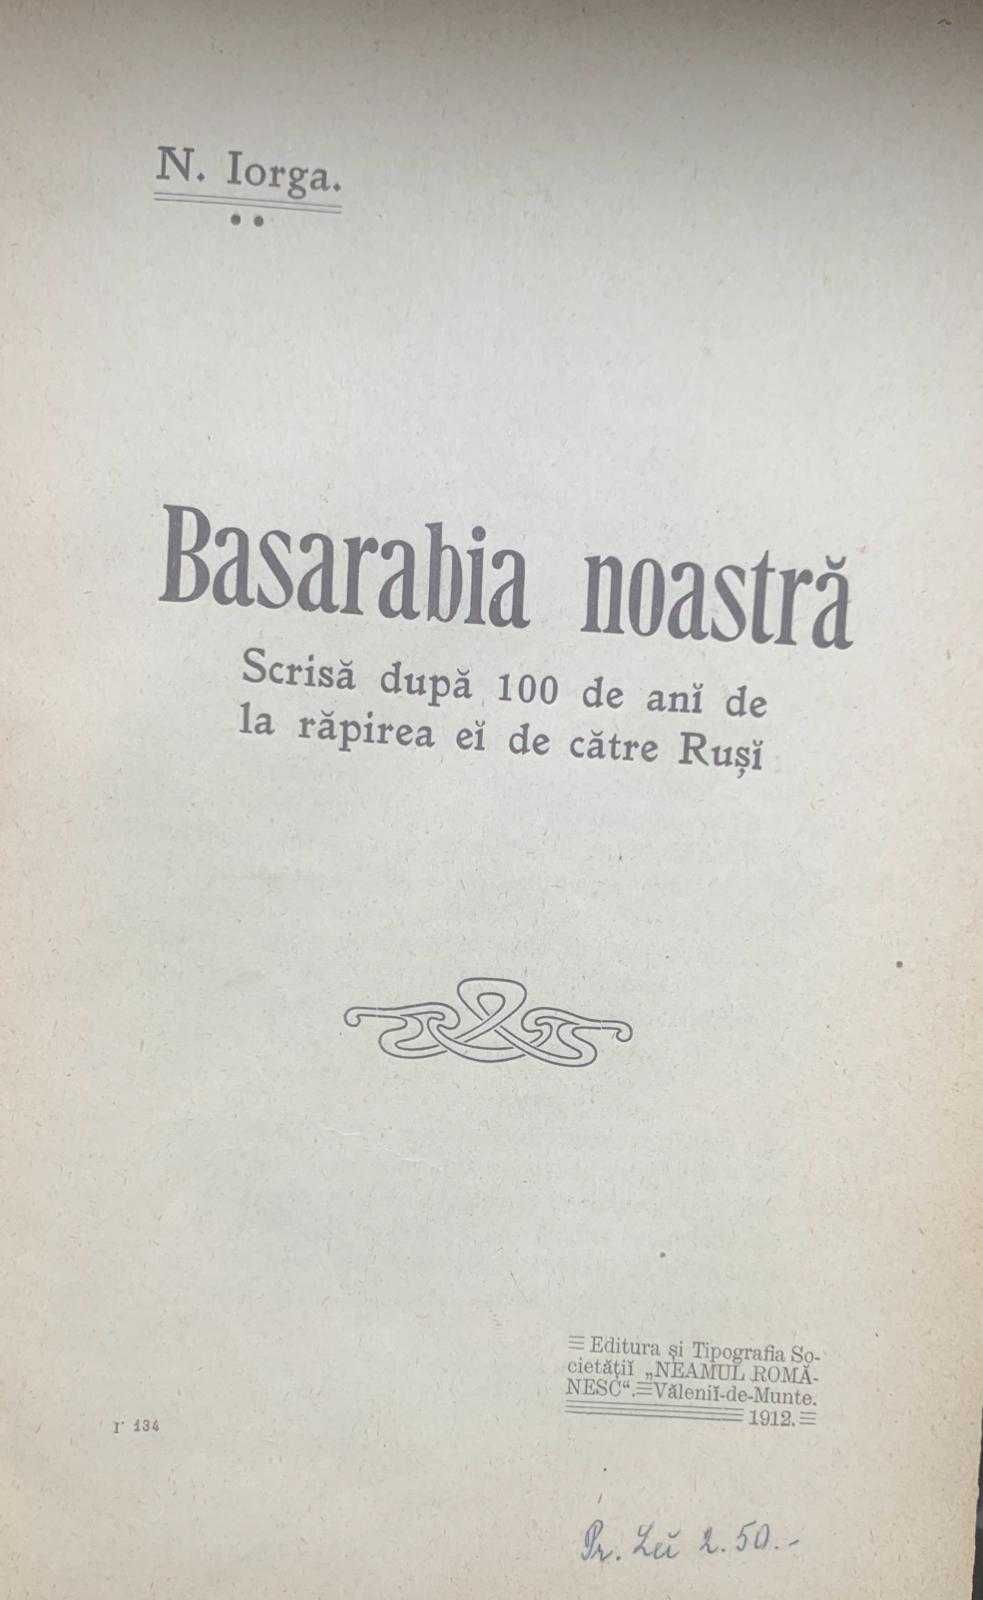 N. Iorga, BASARABIA NOASTRA, 1912, 178 p.